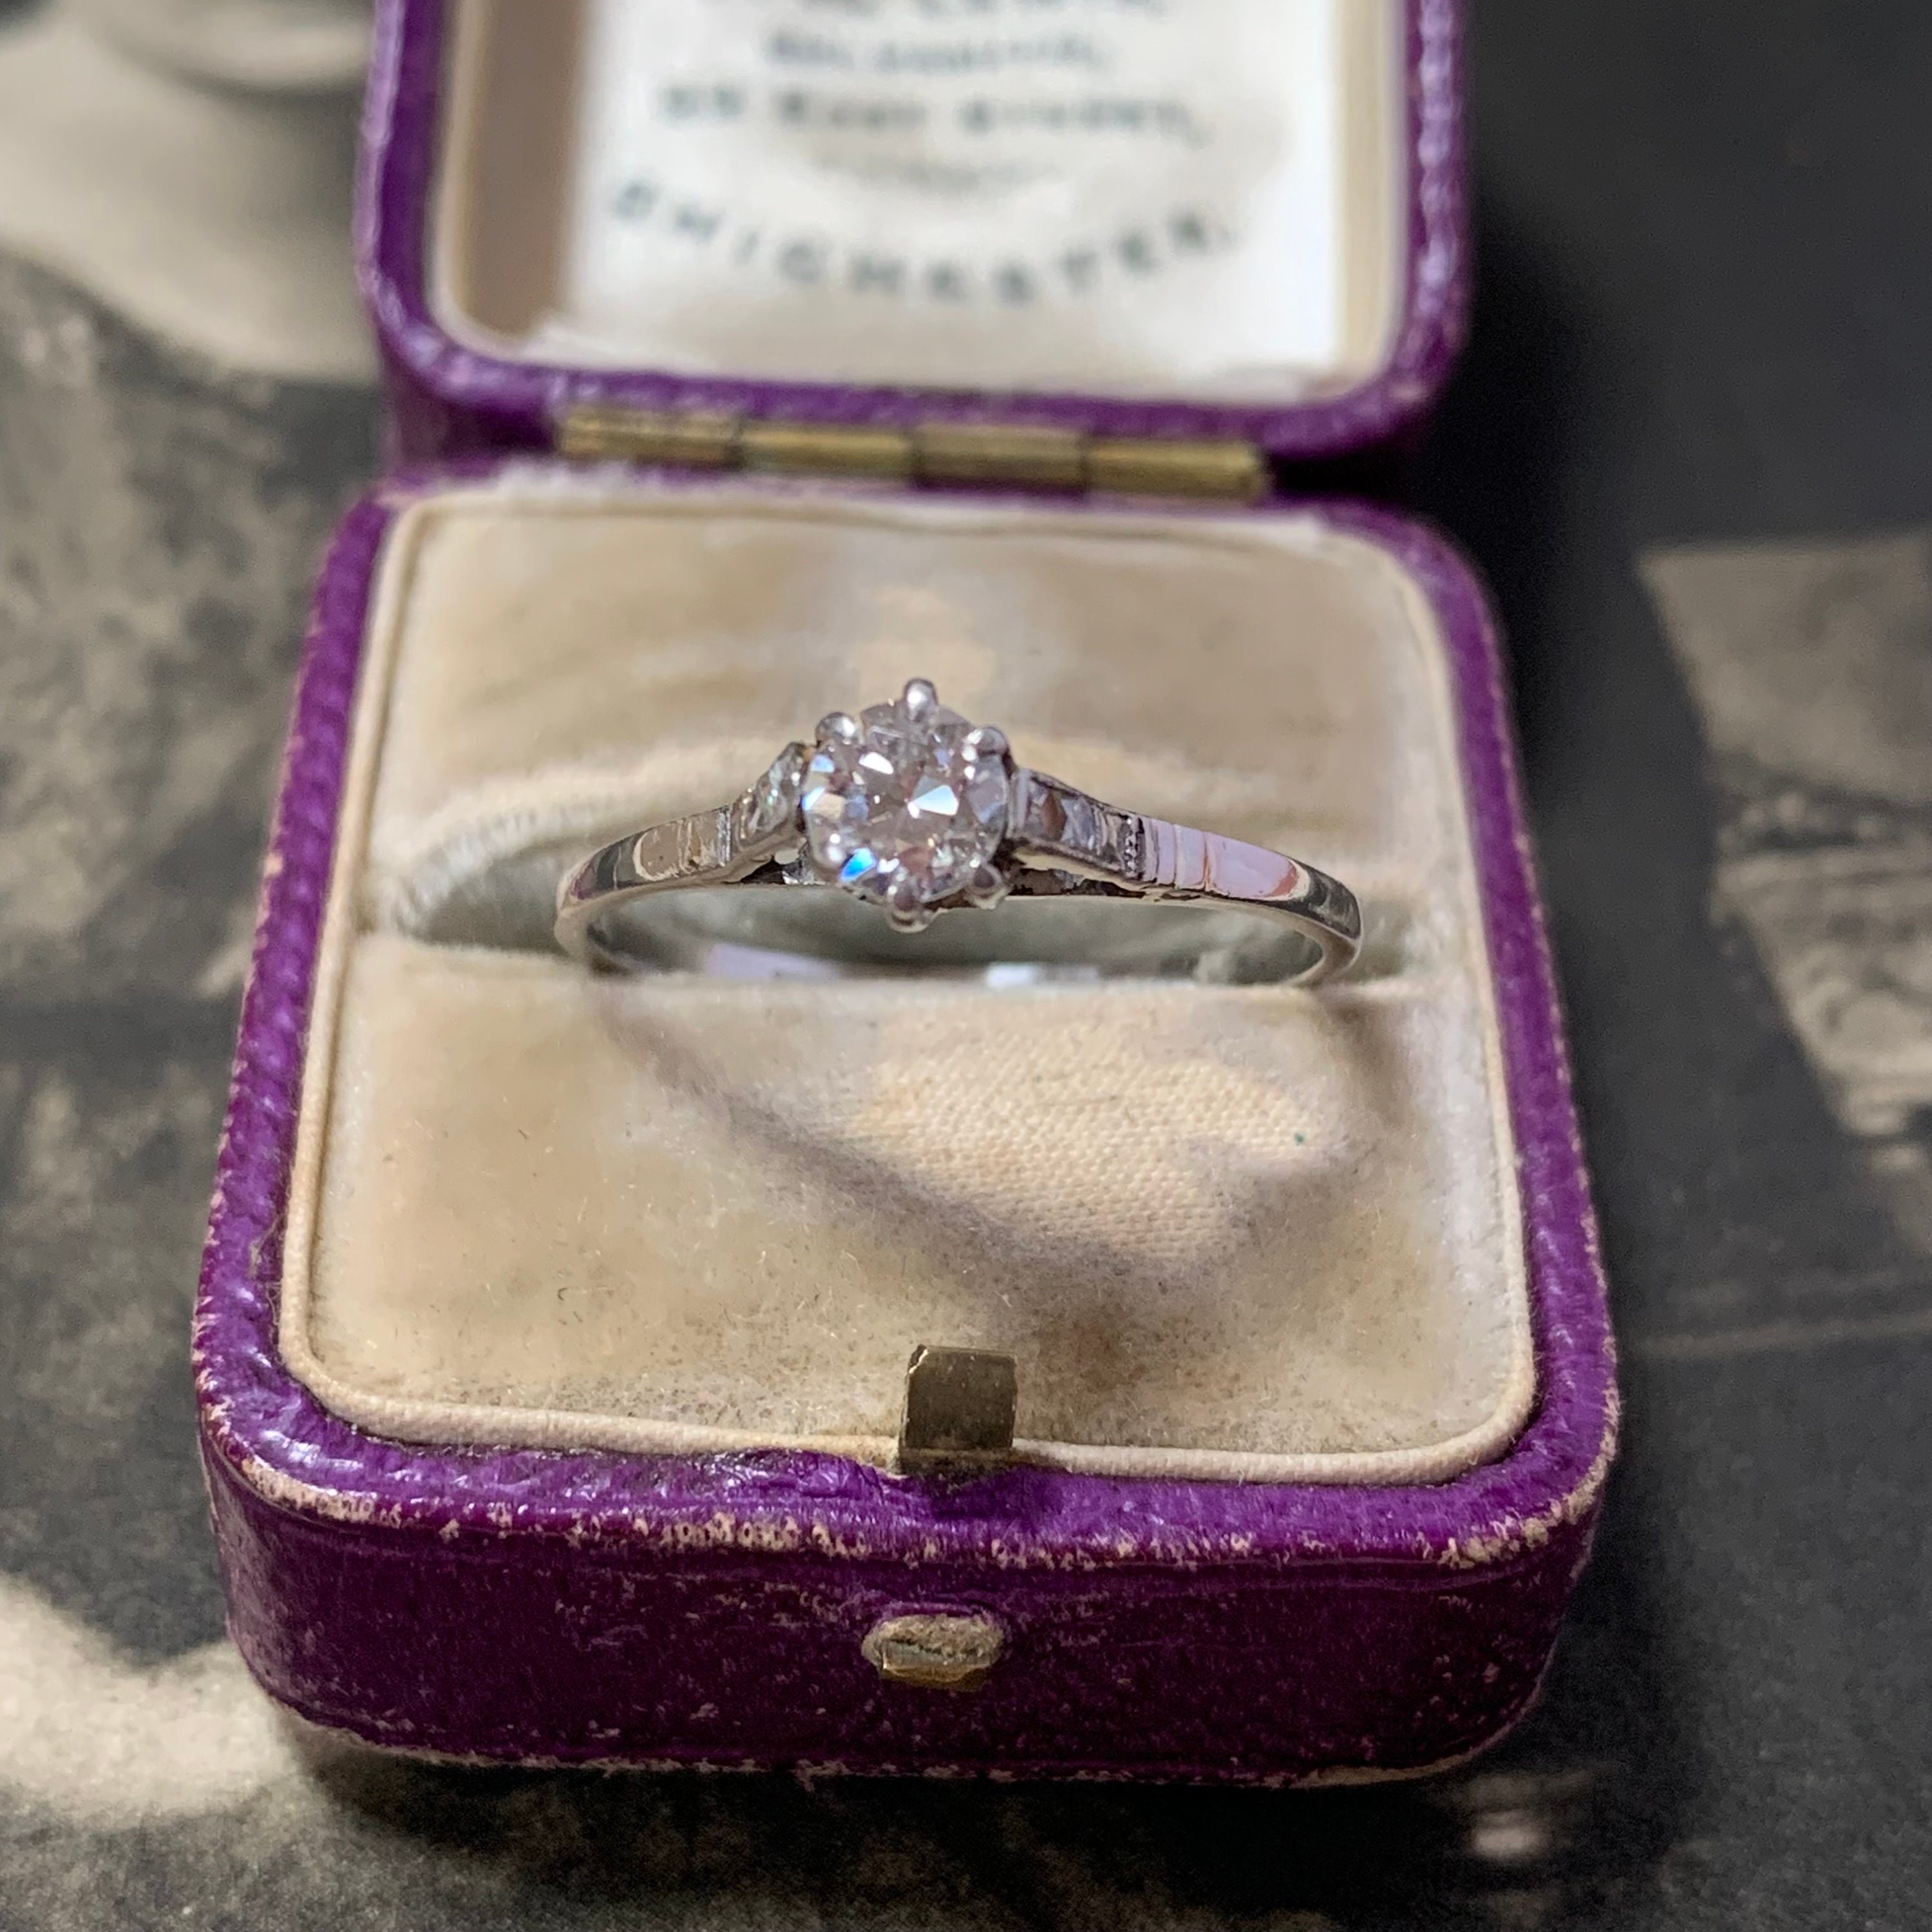 Art Deco Stunning Platinum Diamond Ring. A Wonderful Antique Engagement Or Wedding Ring